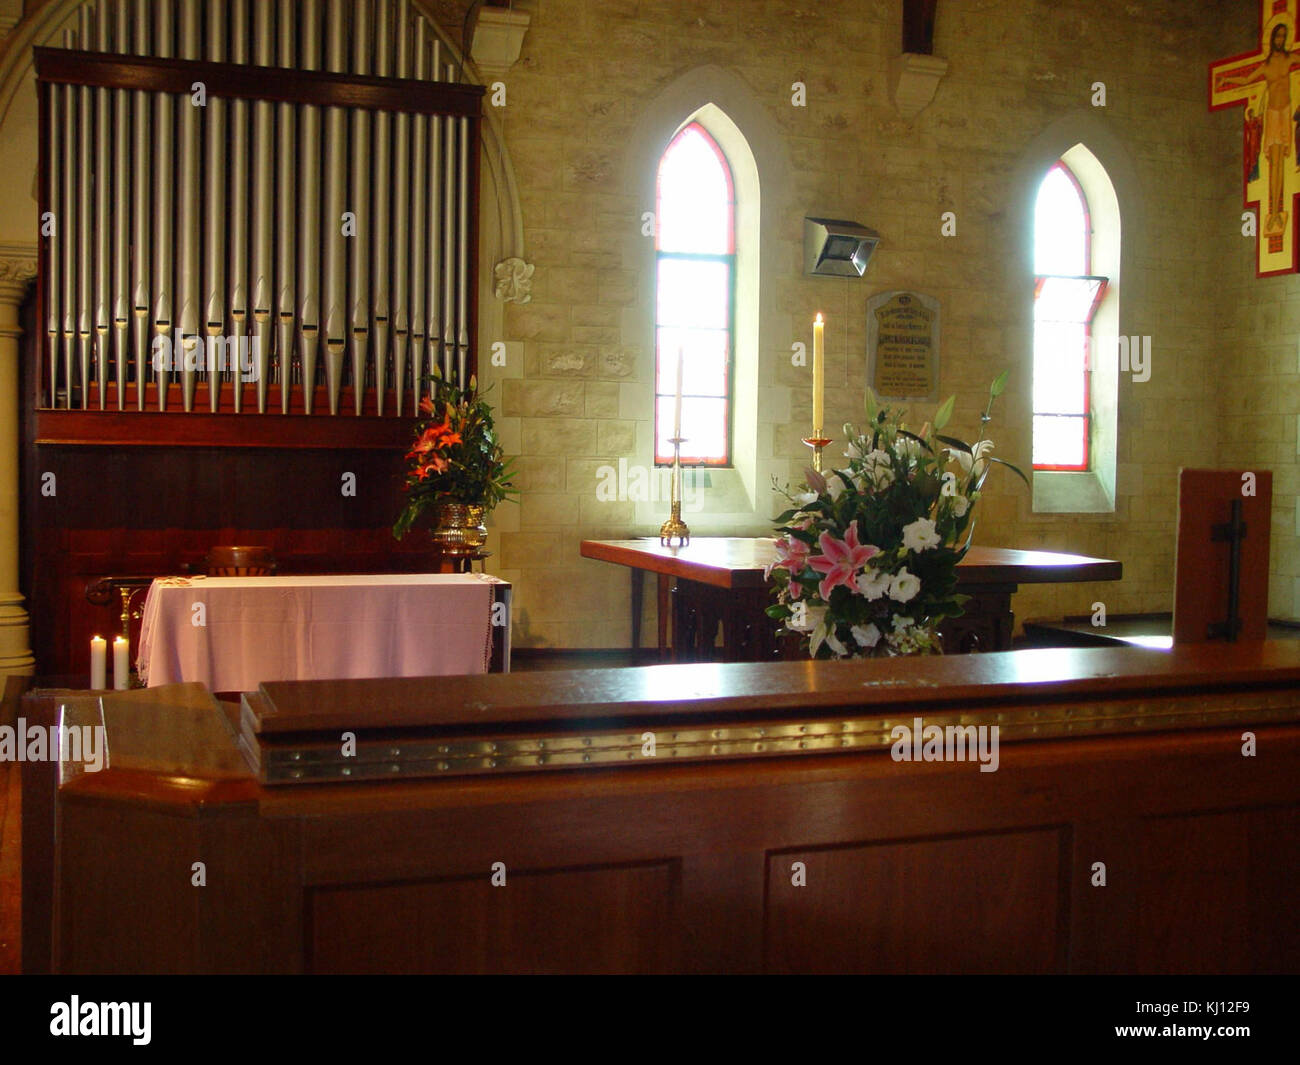 Pipe organ anglican chirst church Stock Photo